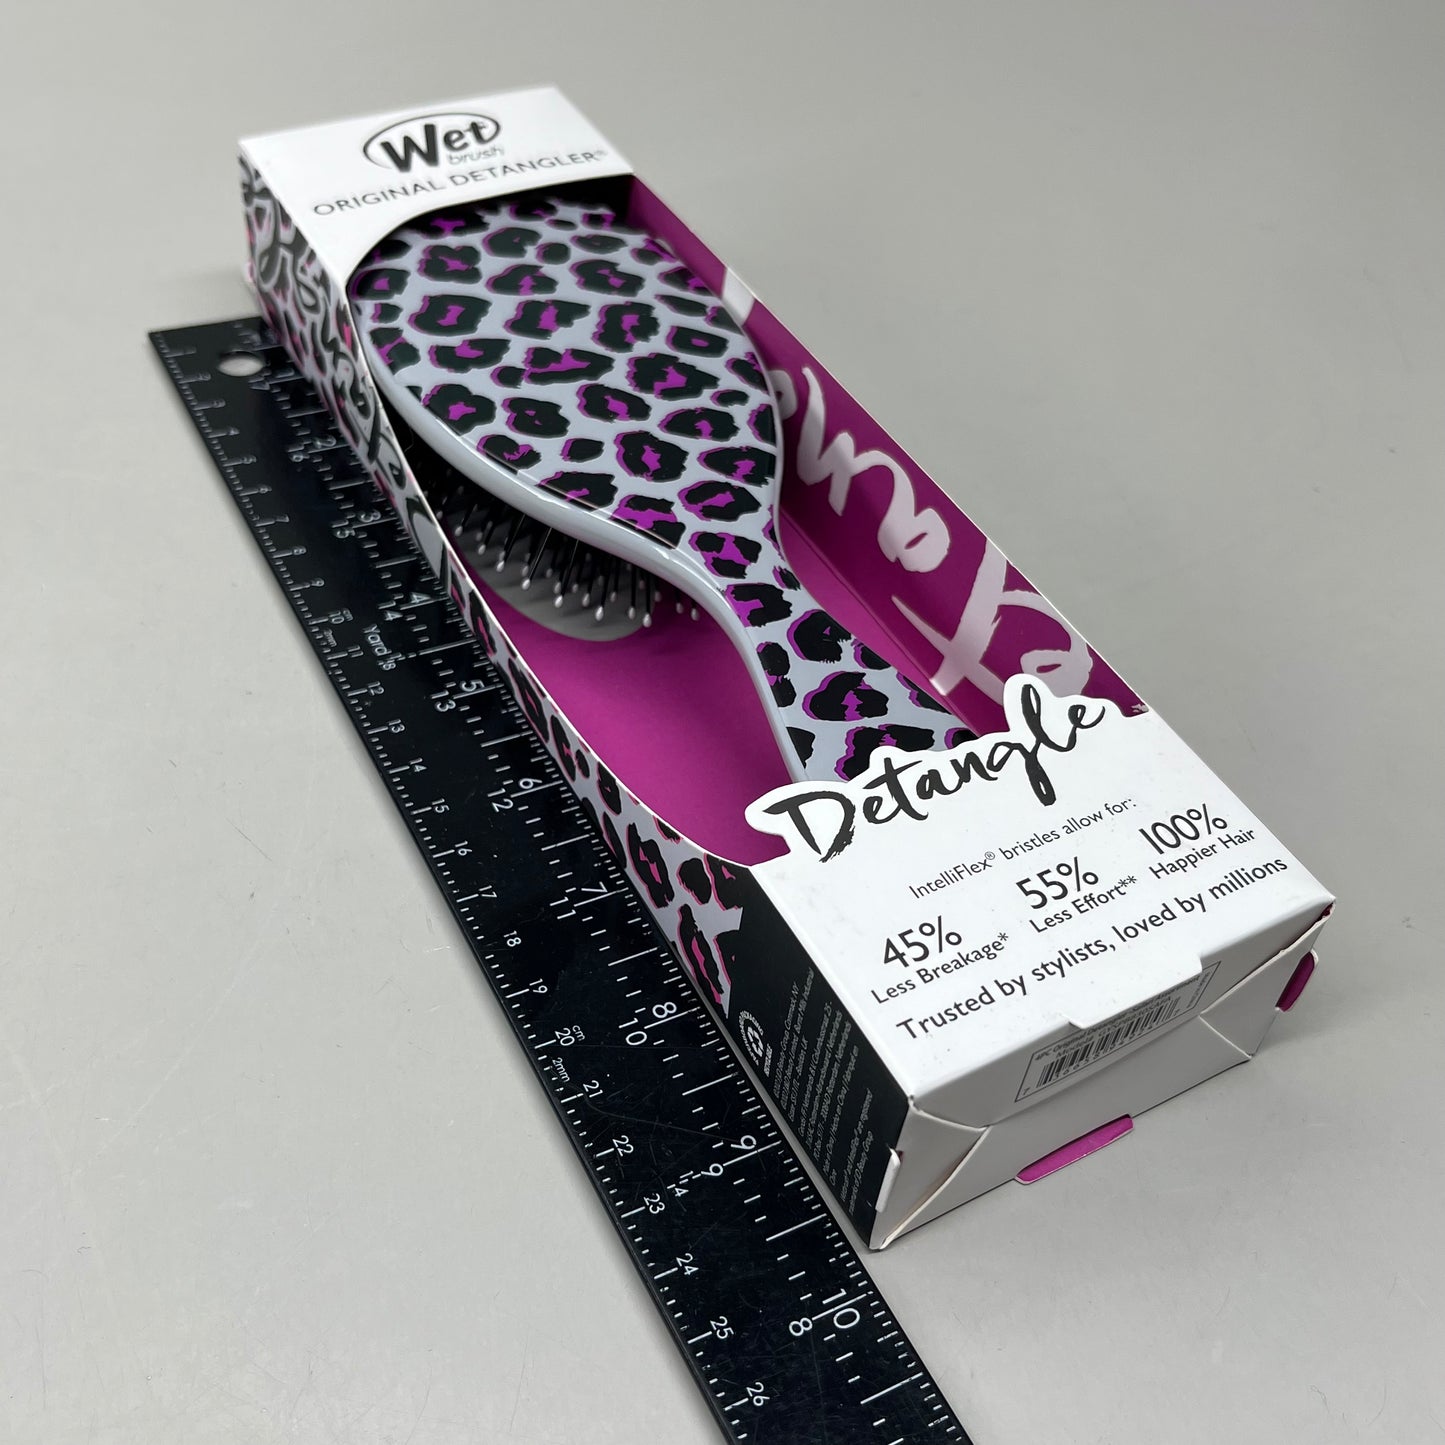 WET BRUSH (3-PACK!) Original Detangler Leopard Print Grey/Pink GYSPB830SAFA